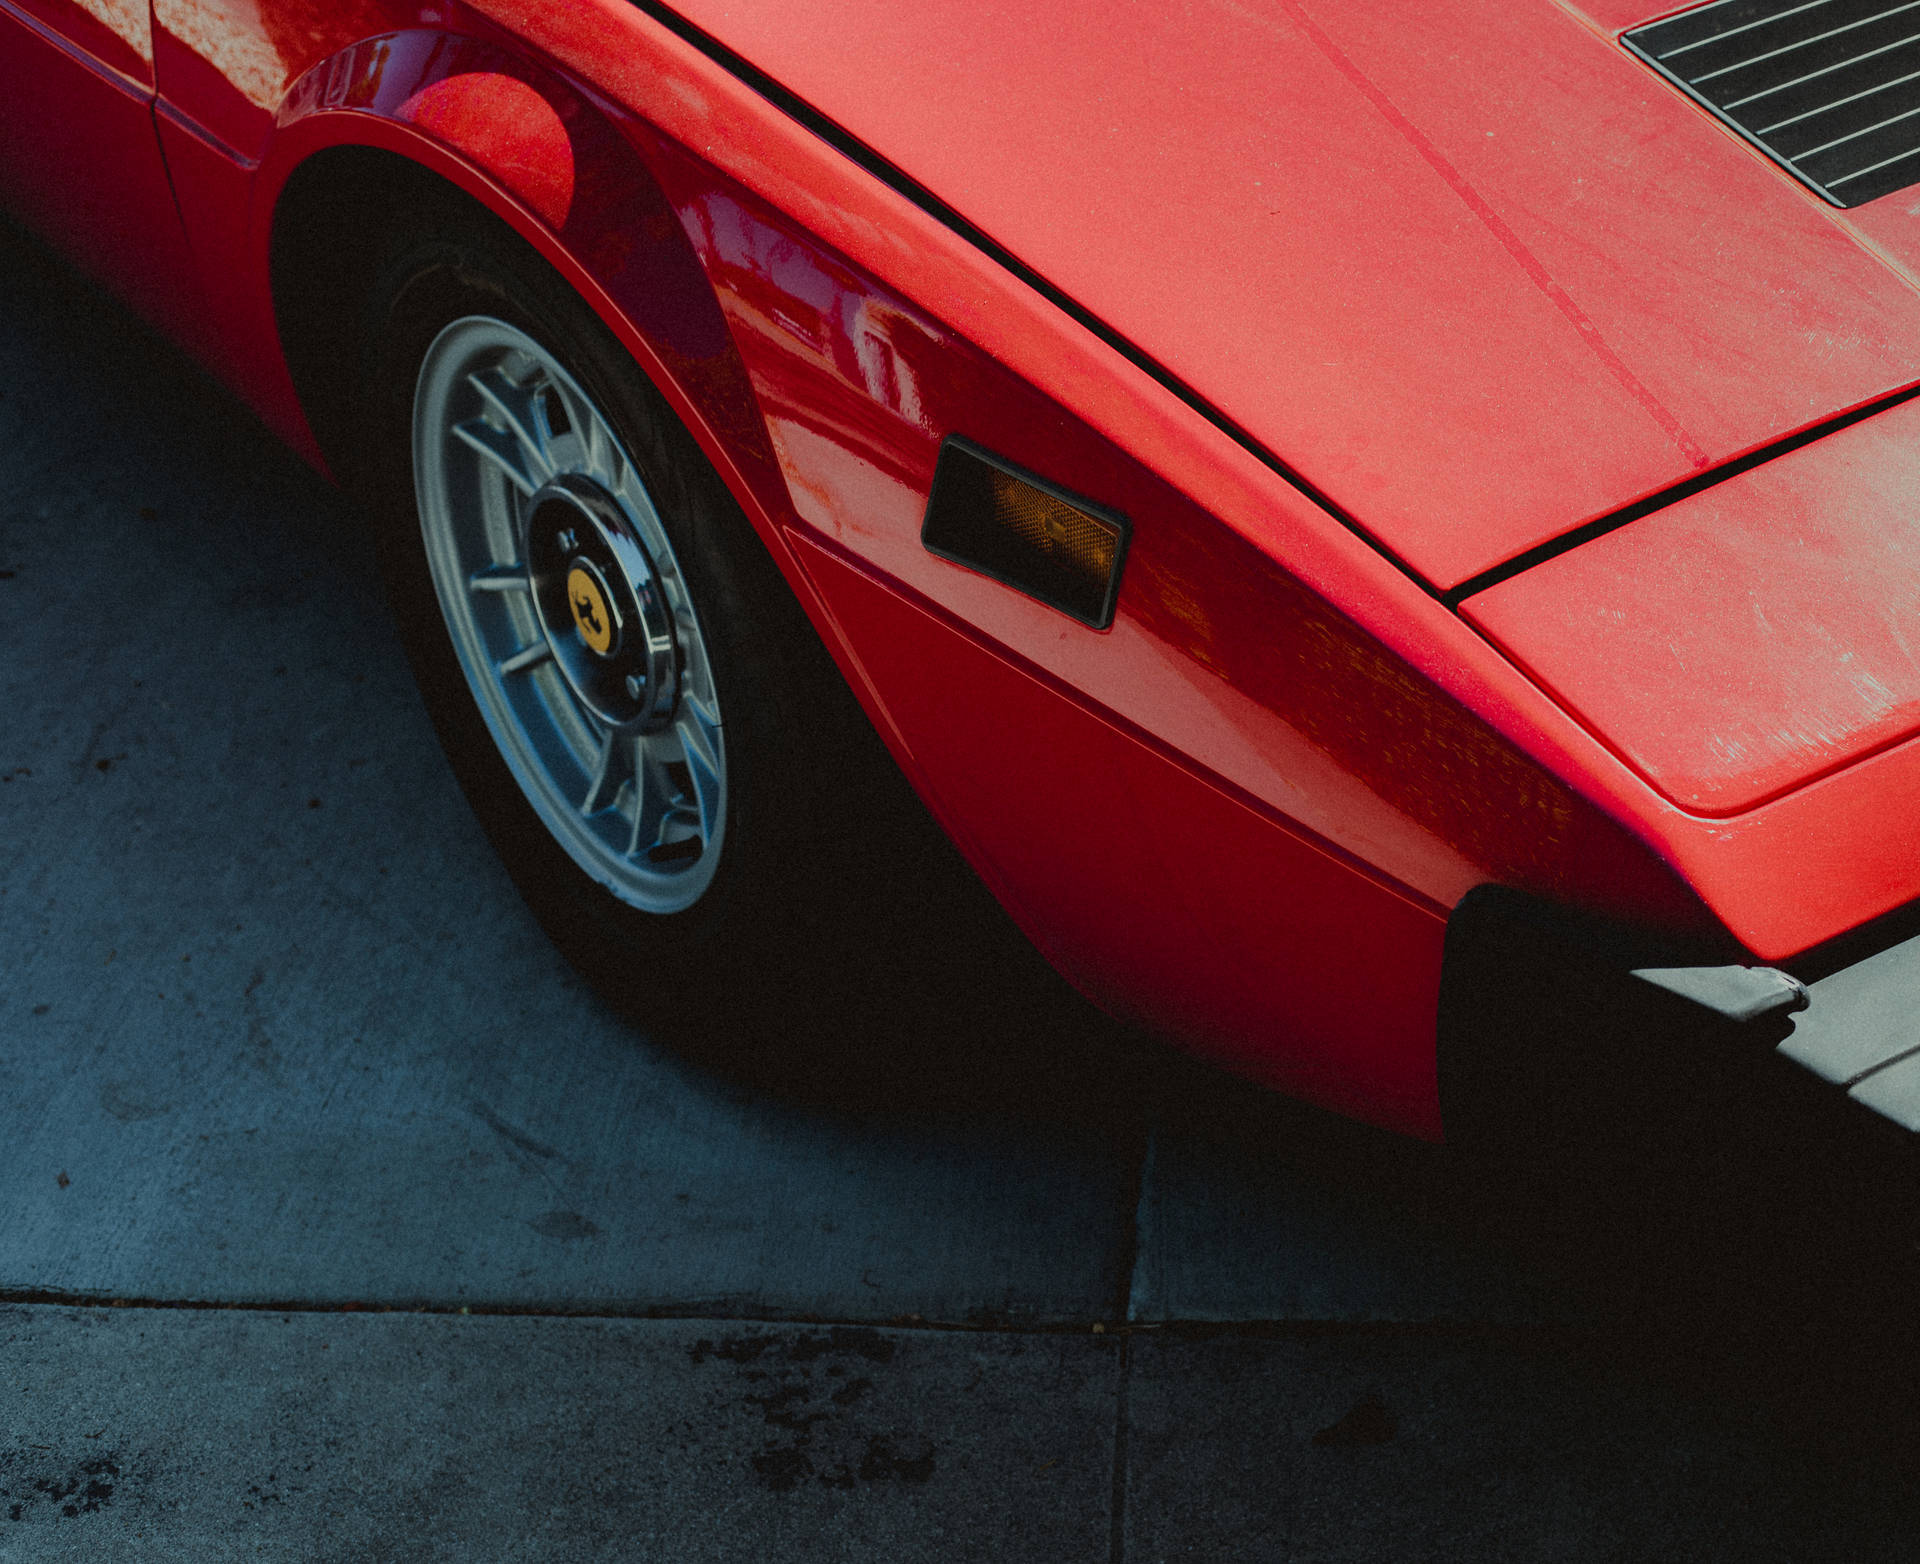 Red Ferrari Rear Wheel Wallpaper